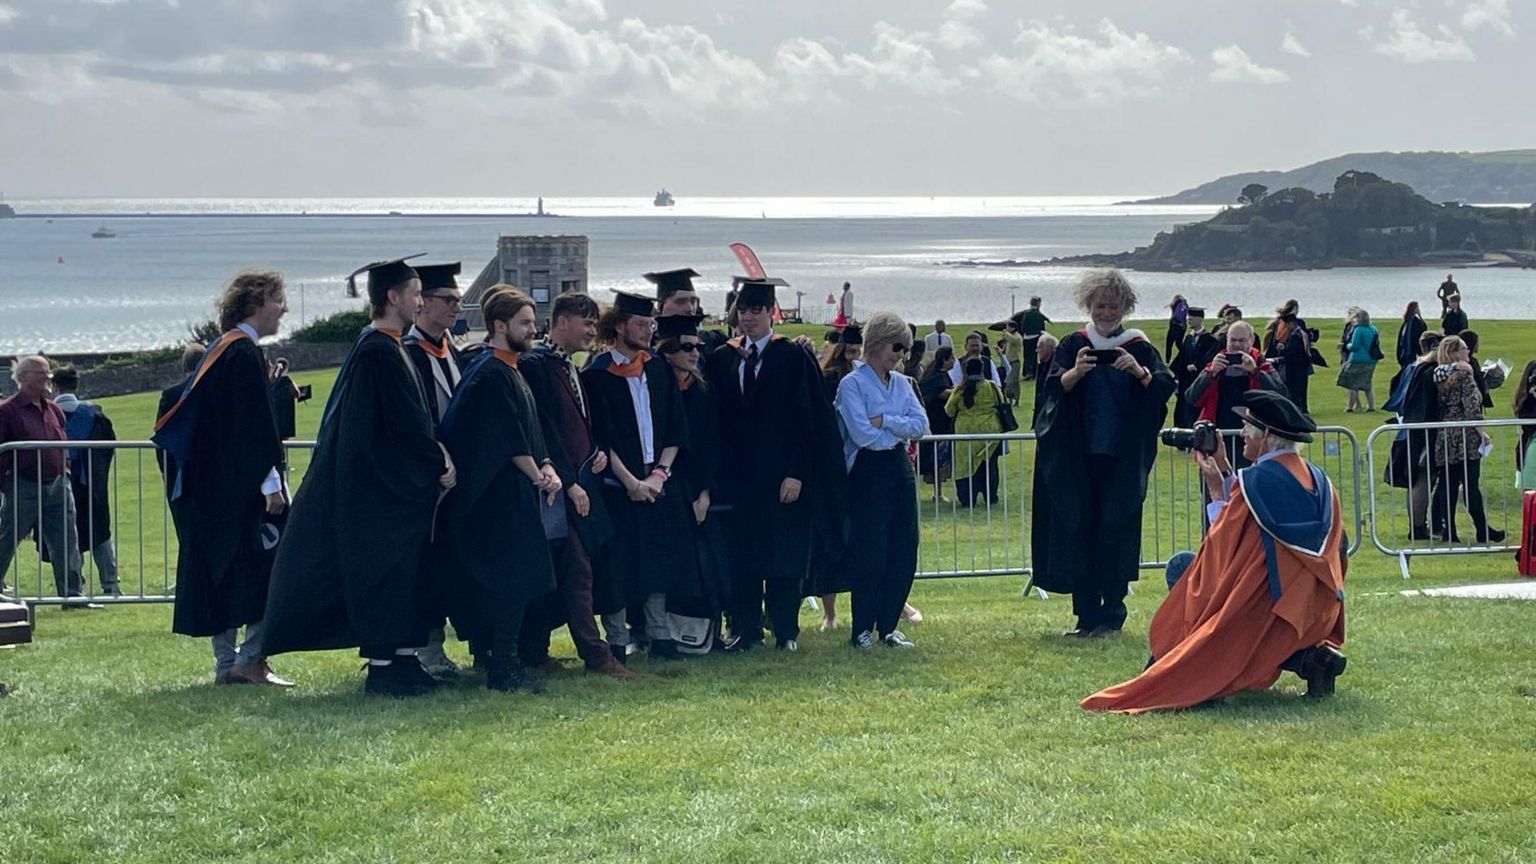 Sir Roger Deakins taking photos of graduates